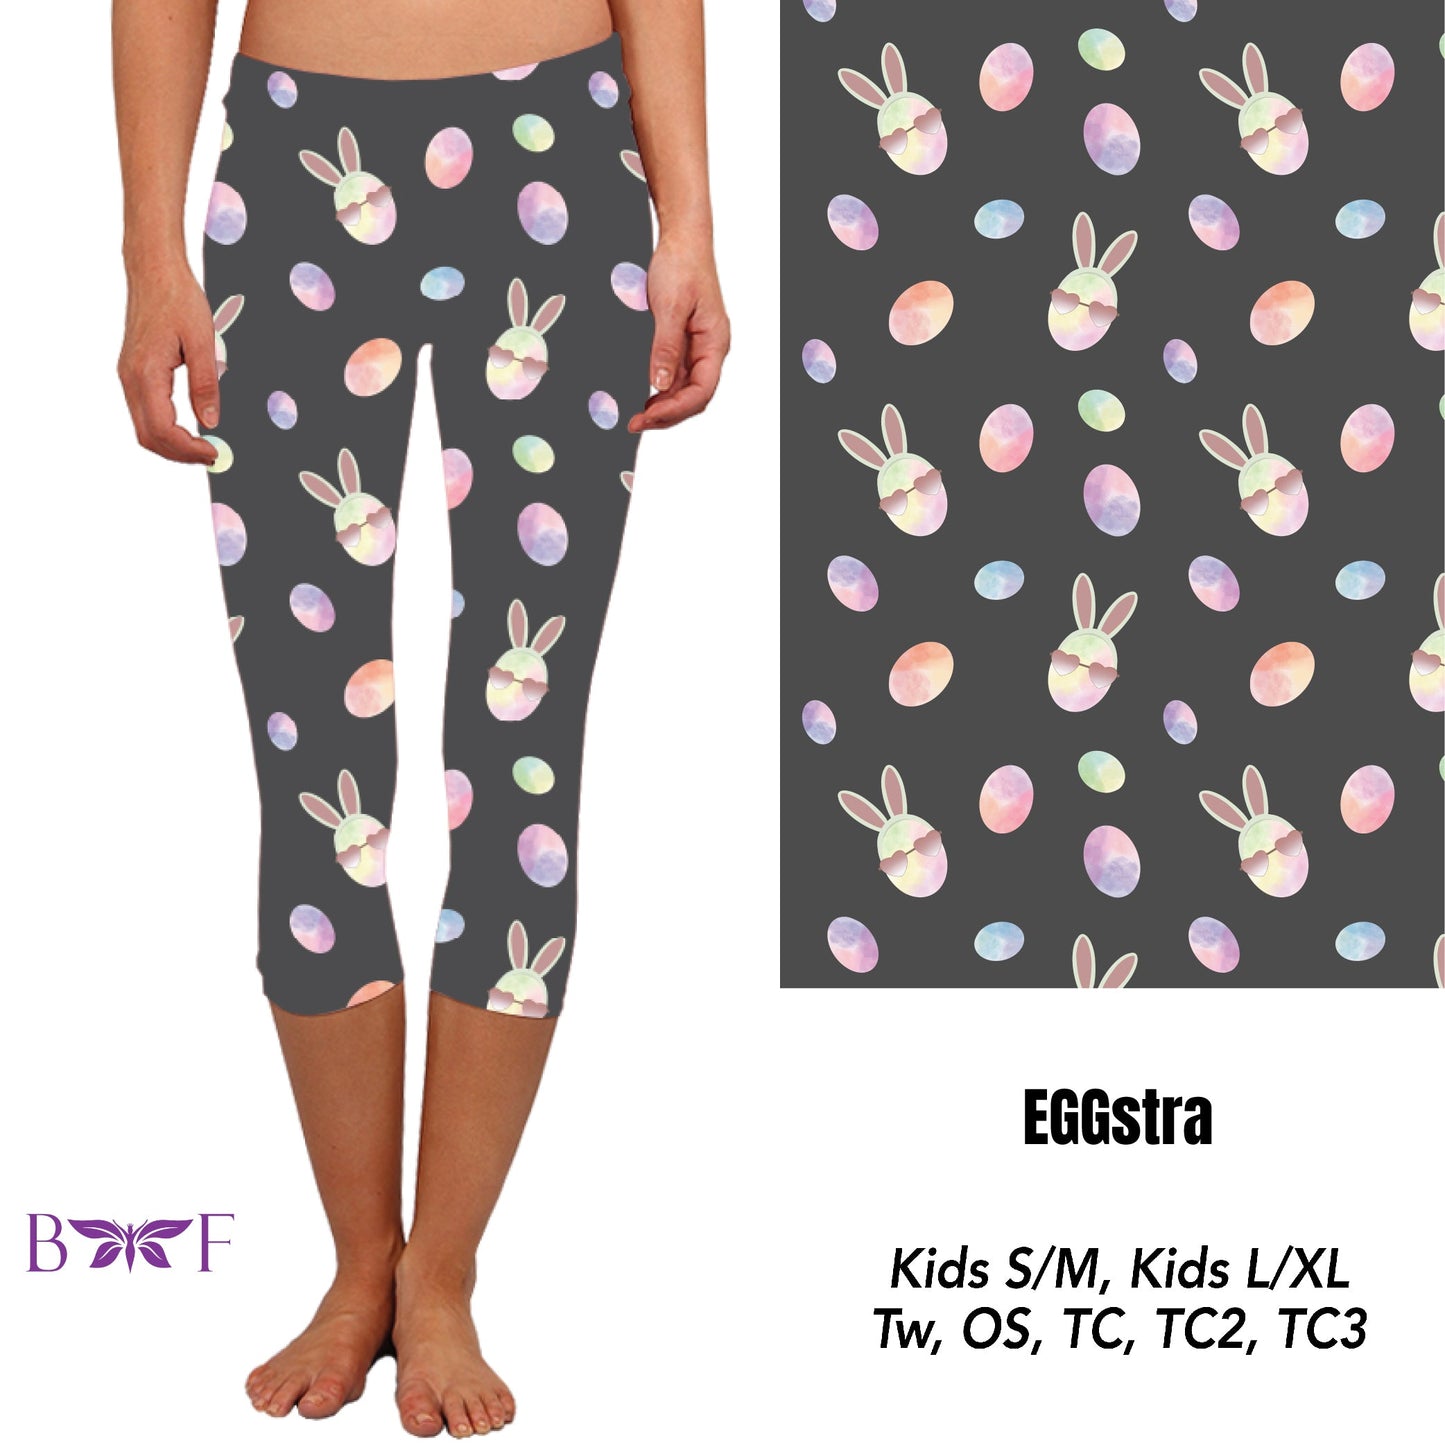 EGGstra leggings with pockets